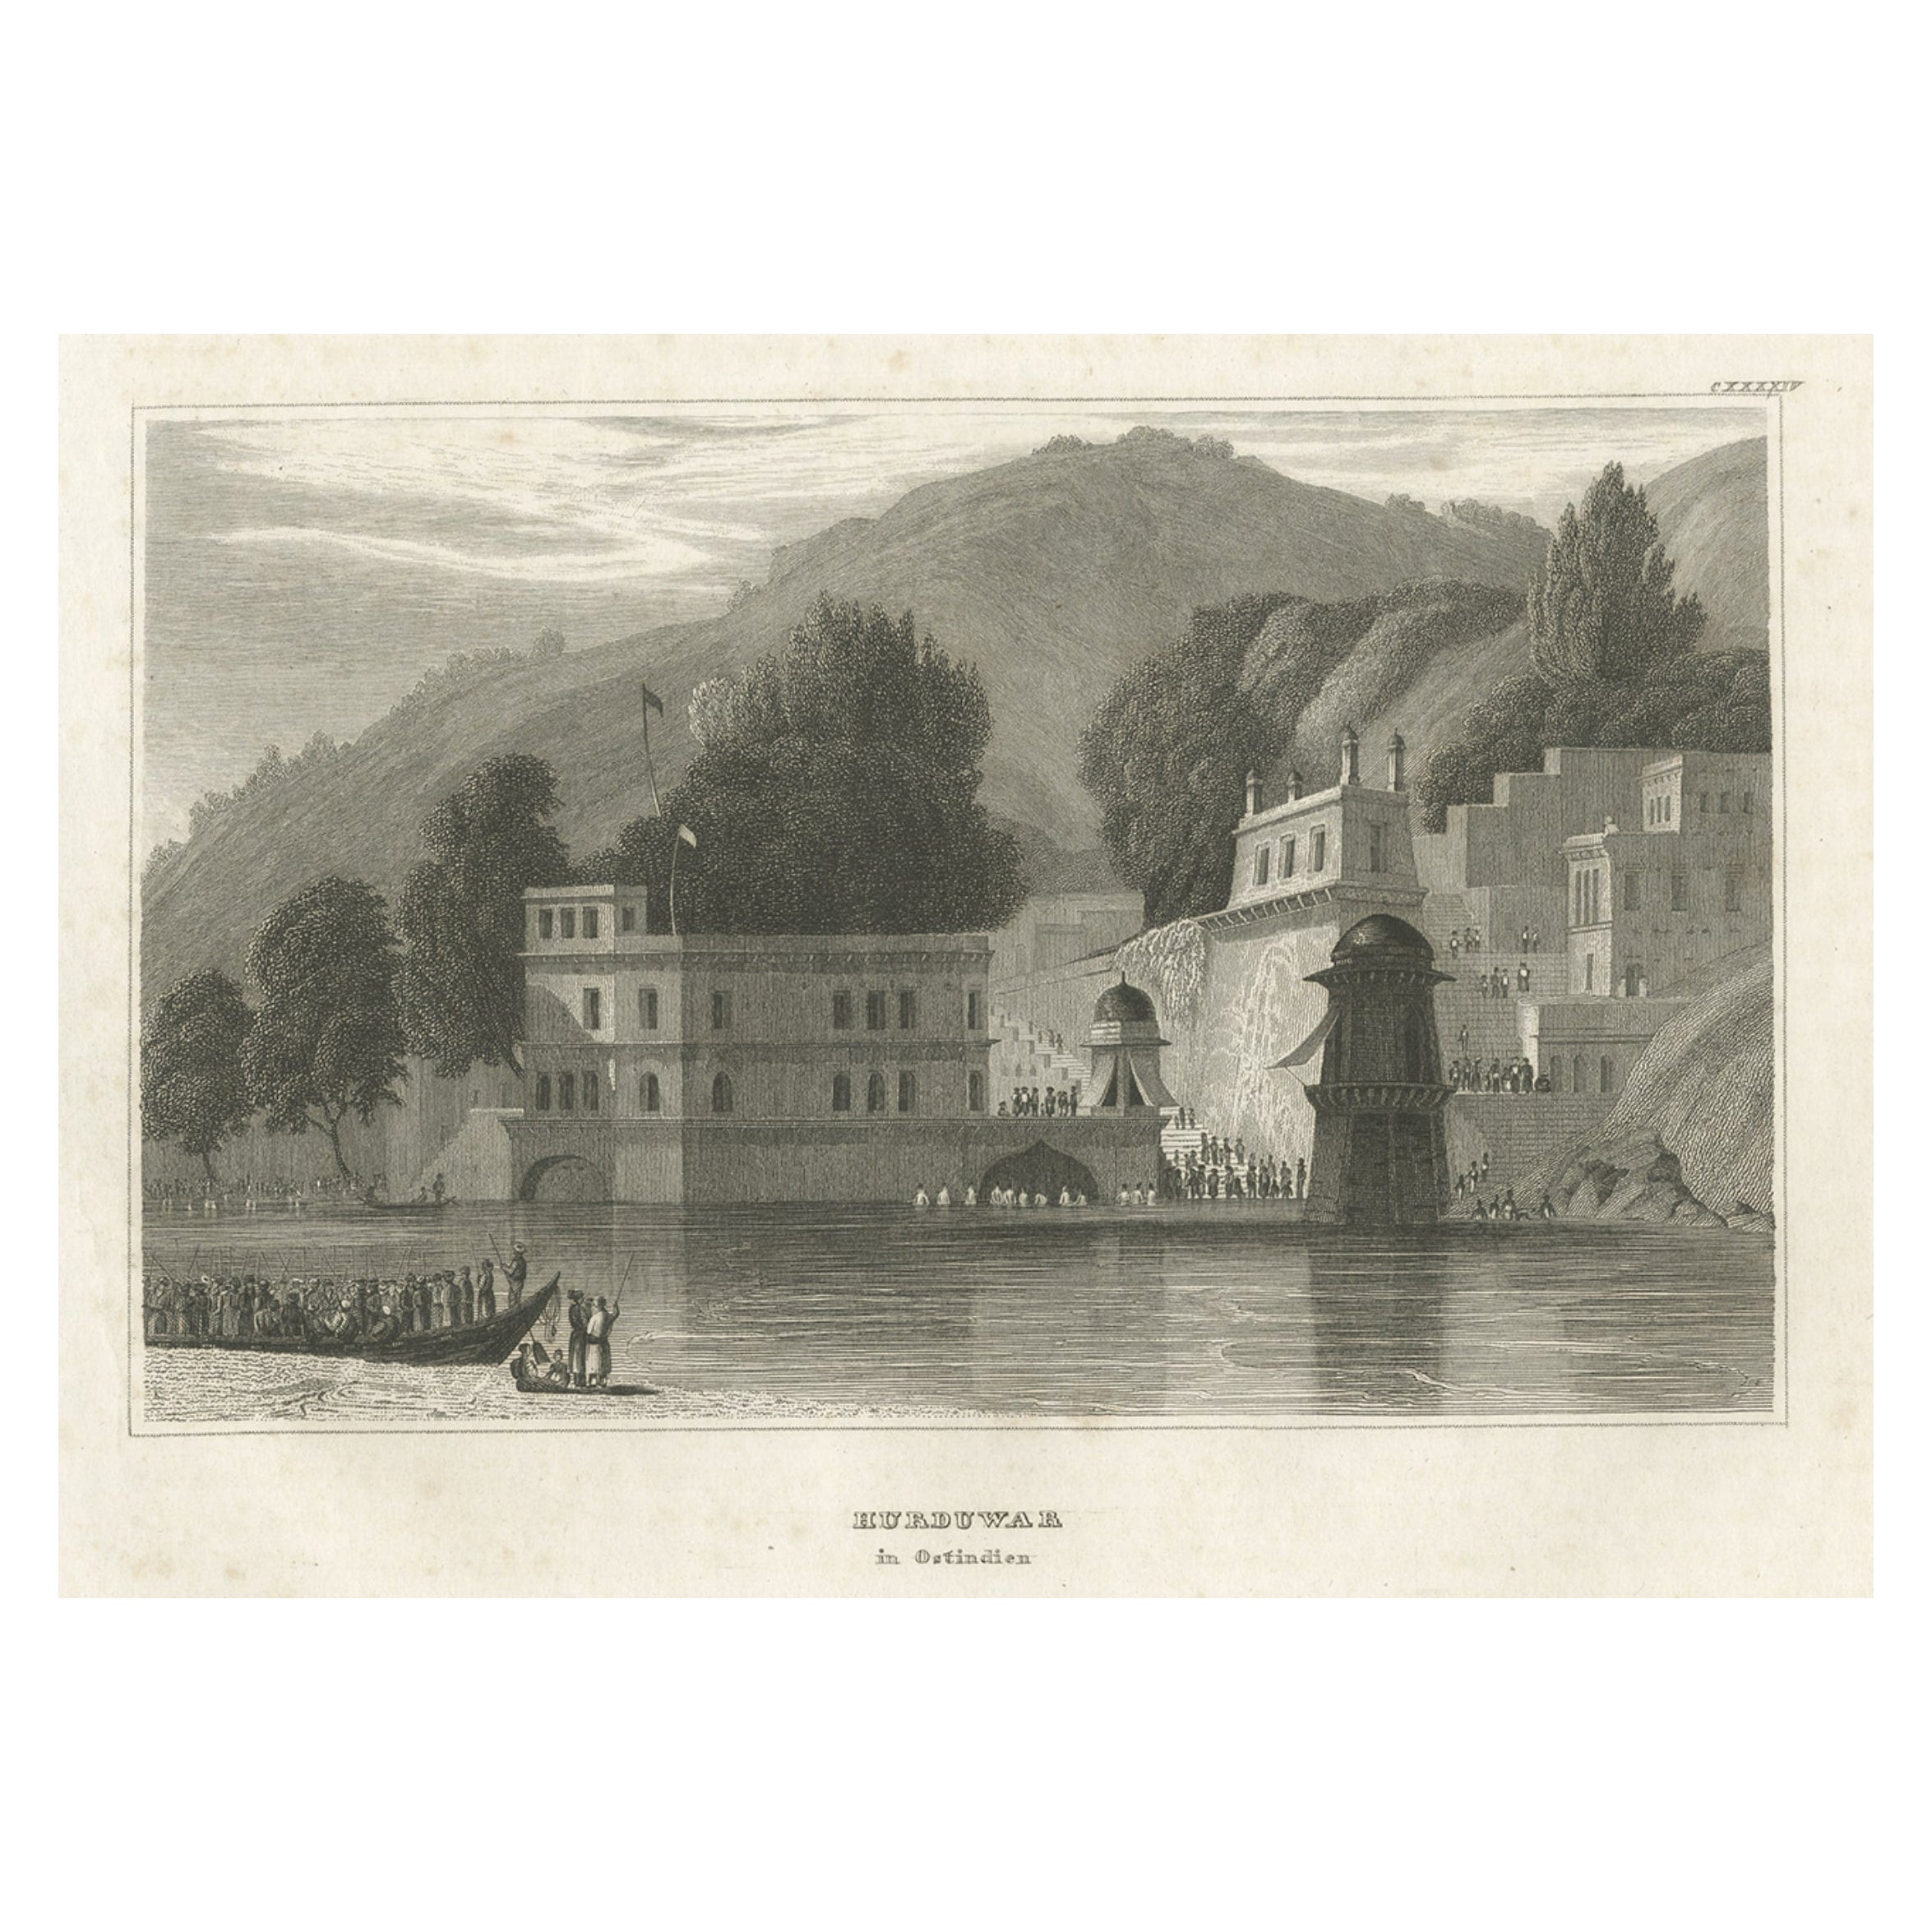 Antique Print of Haridwar City in Uttarakhand, India, 1837